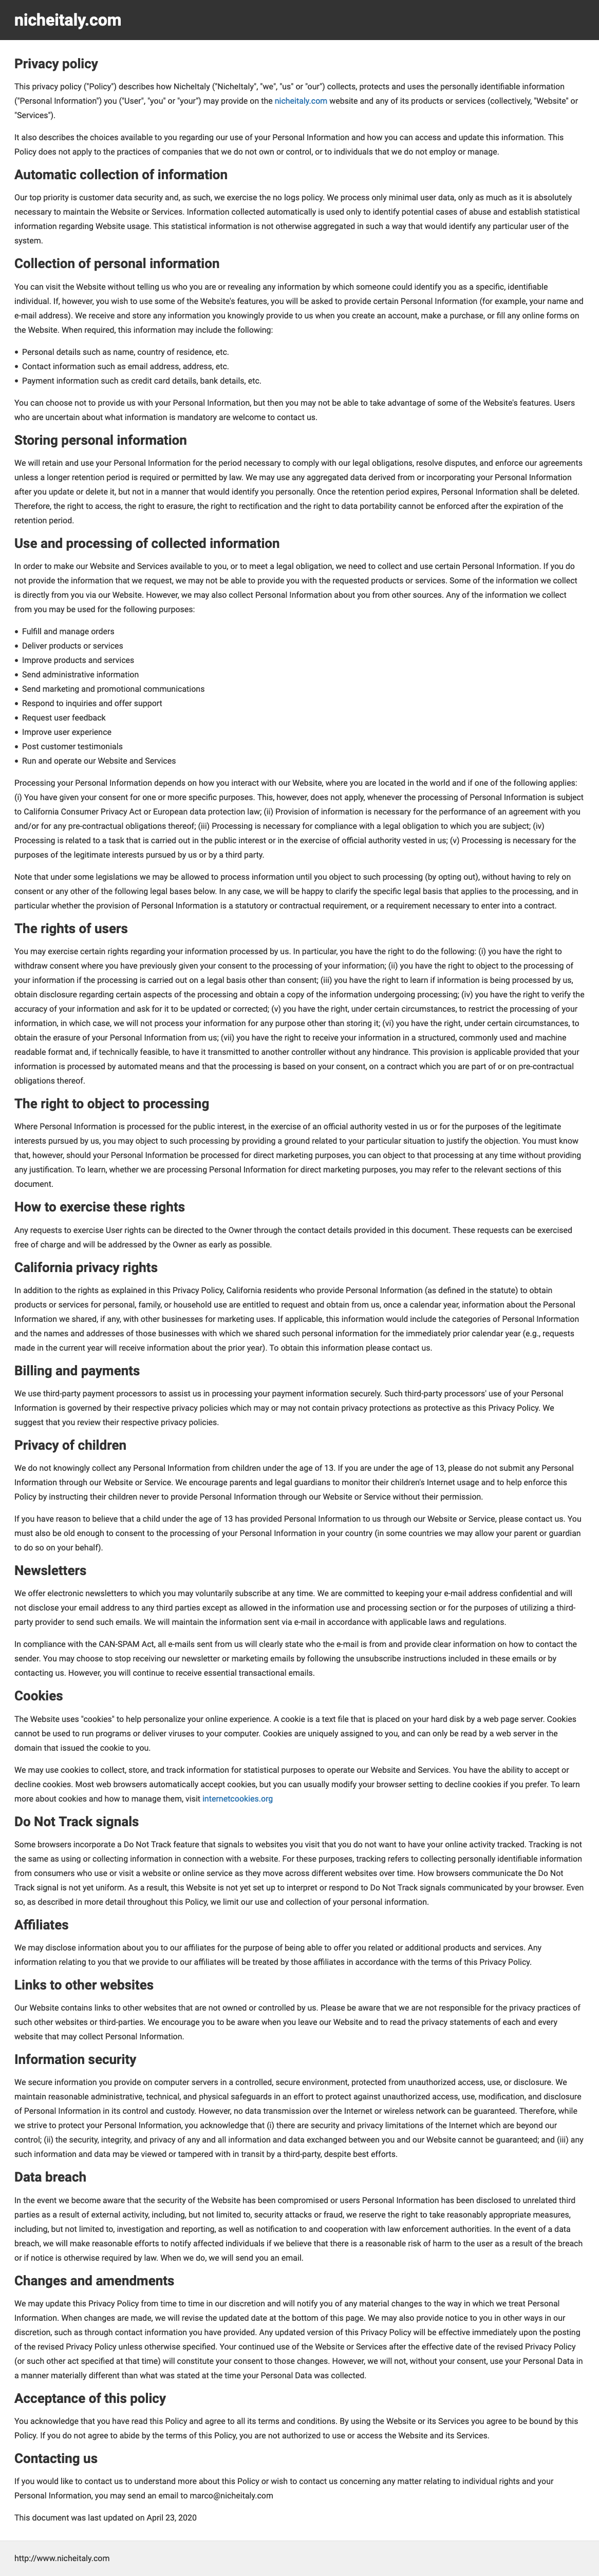 Screenshot_2020-04-24-Privacy-policy-for-nicheitaly-com